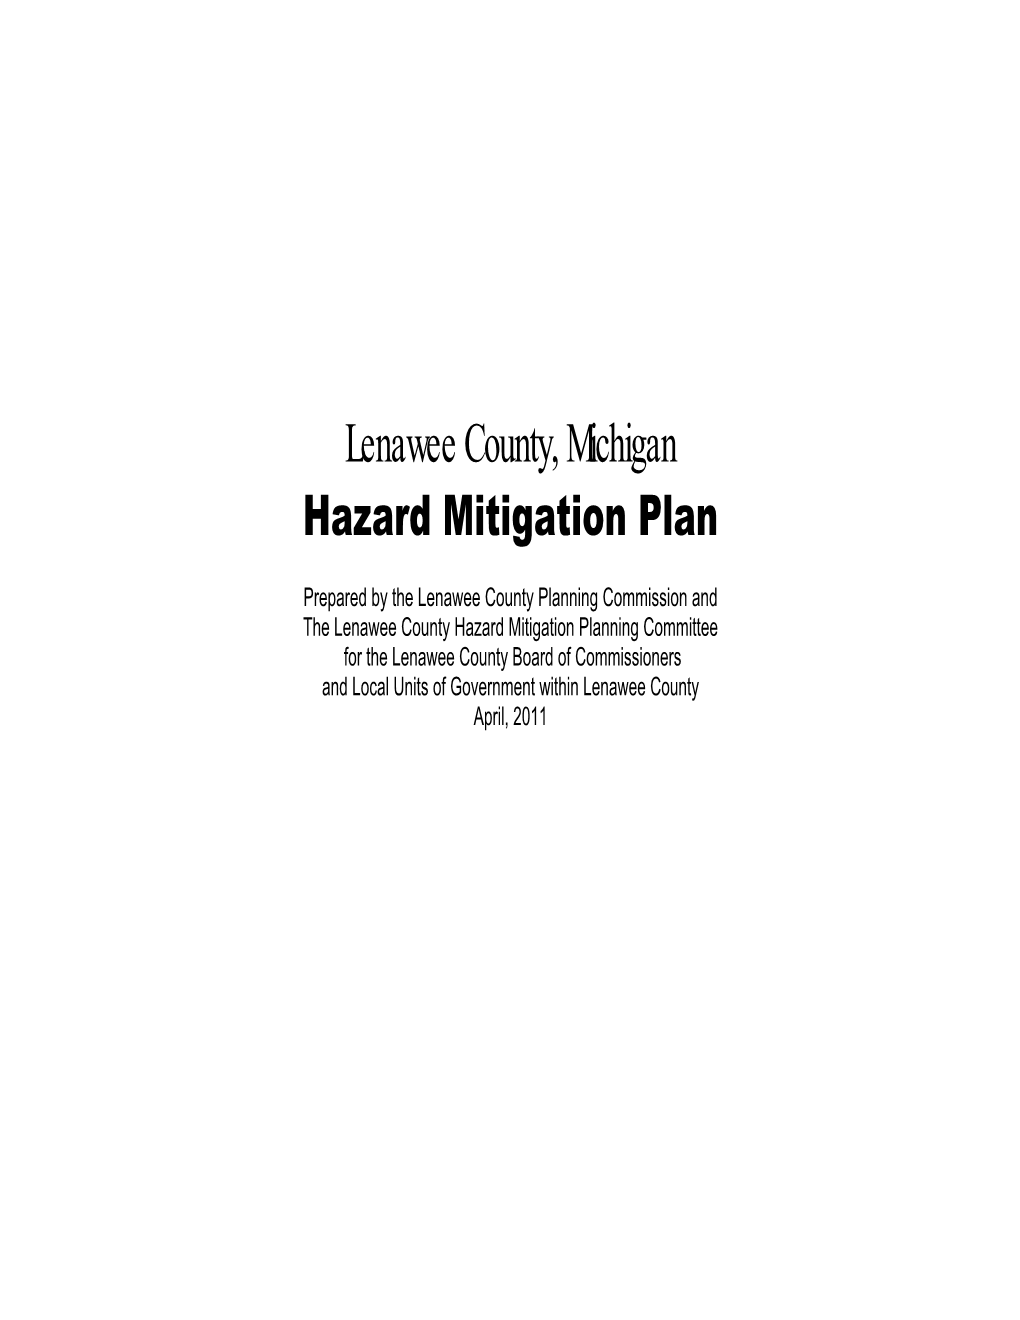 Hazard Mitigation Plan for Lenawee County